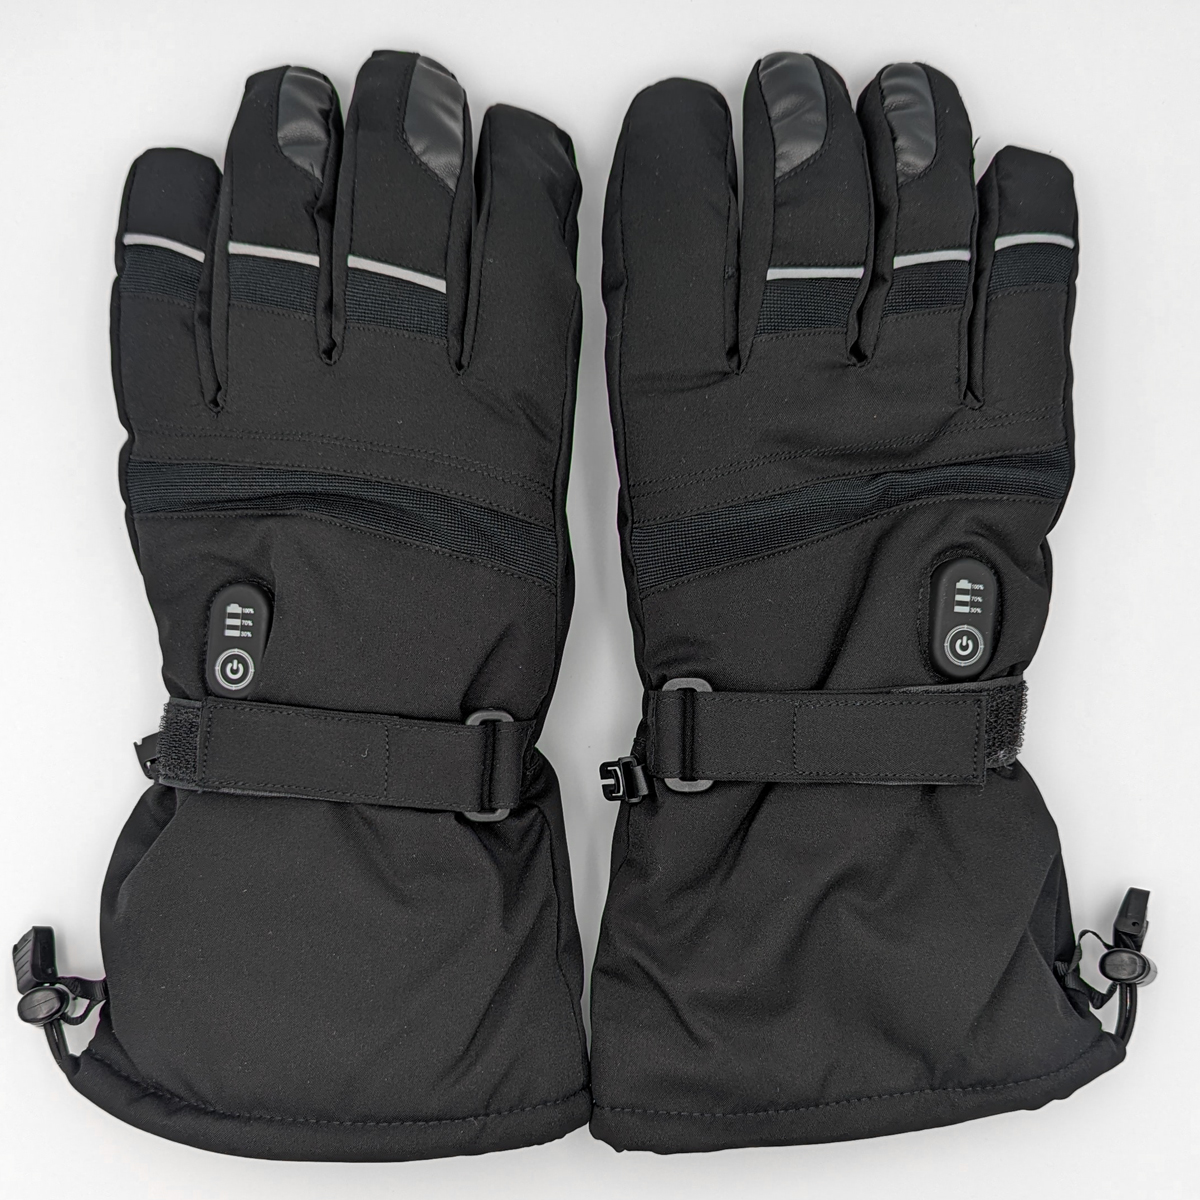 GOKOZY heated gloves 1